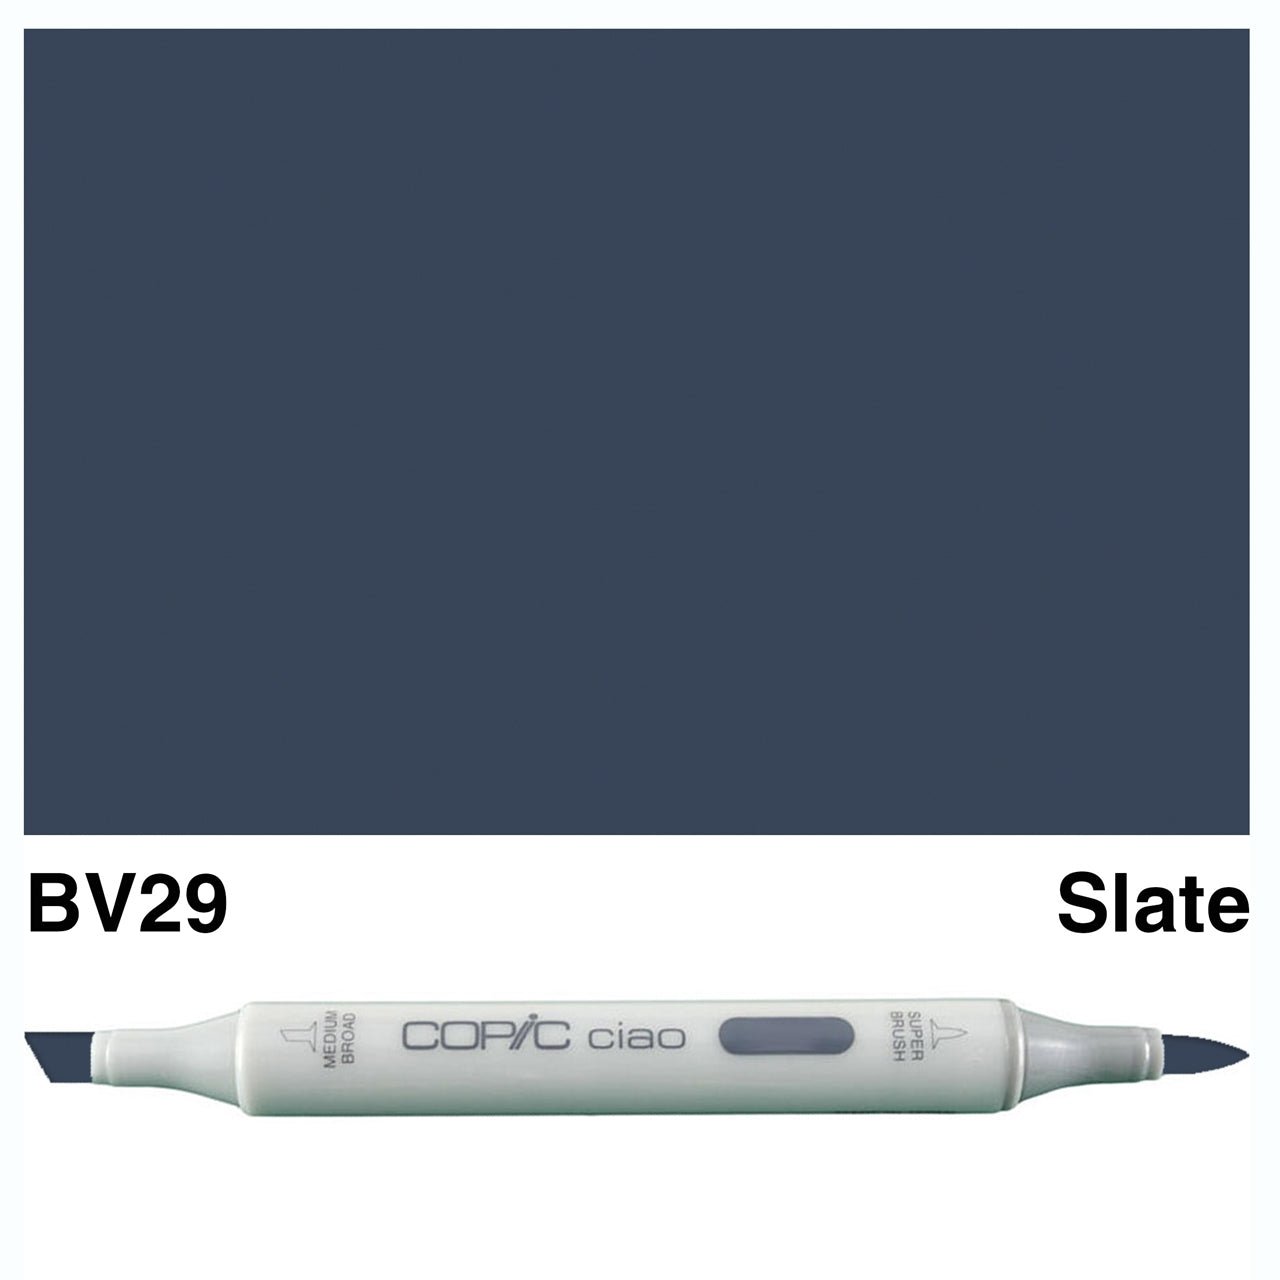 Copic Ciao BV29 Slate - theartshop.com.au